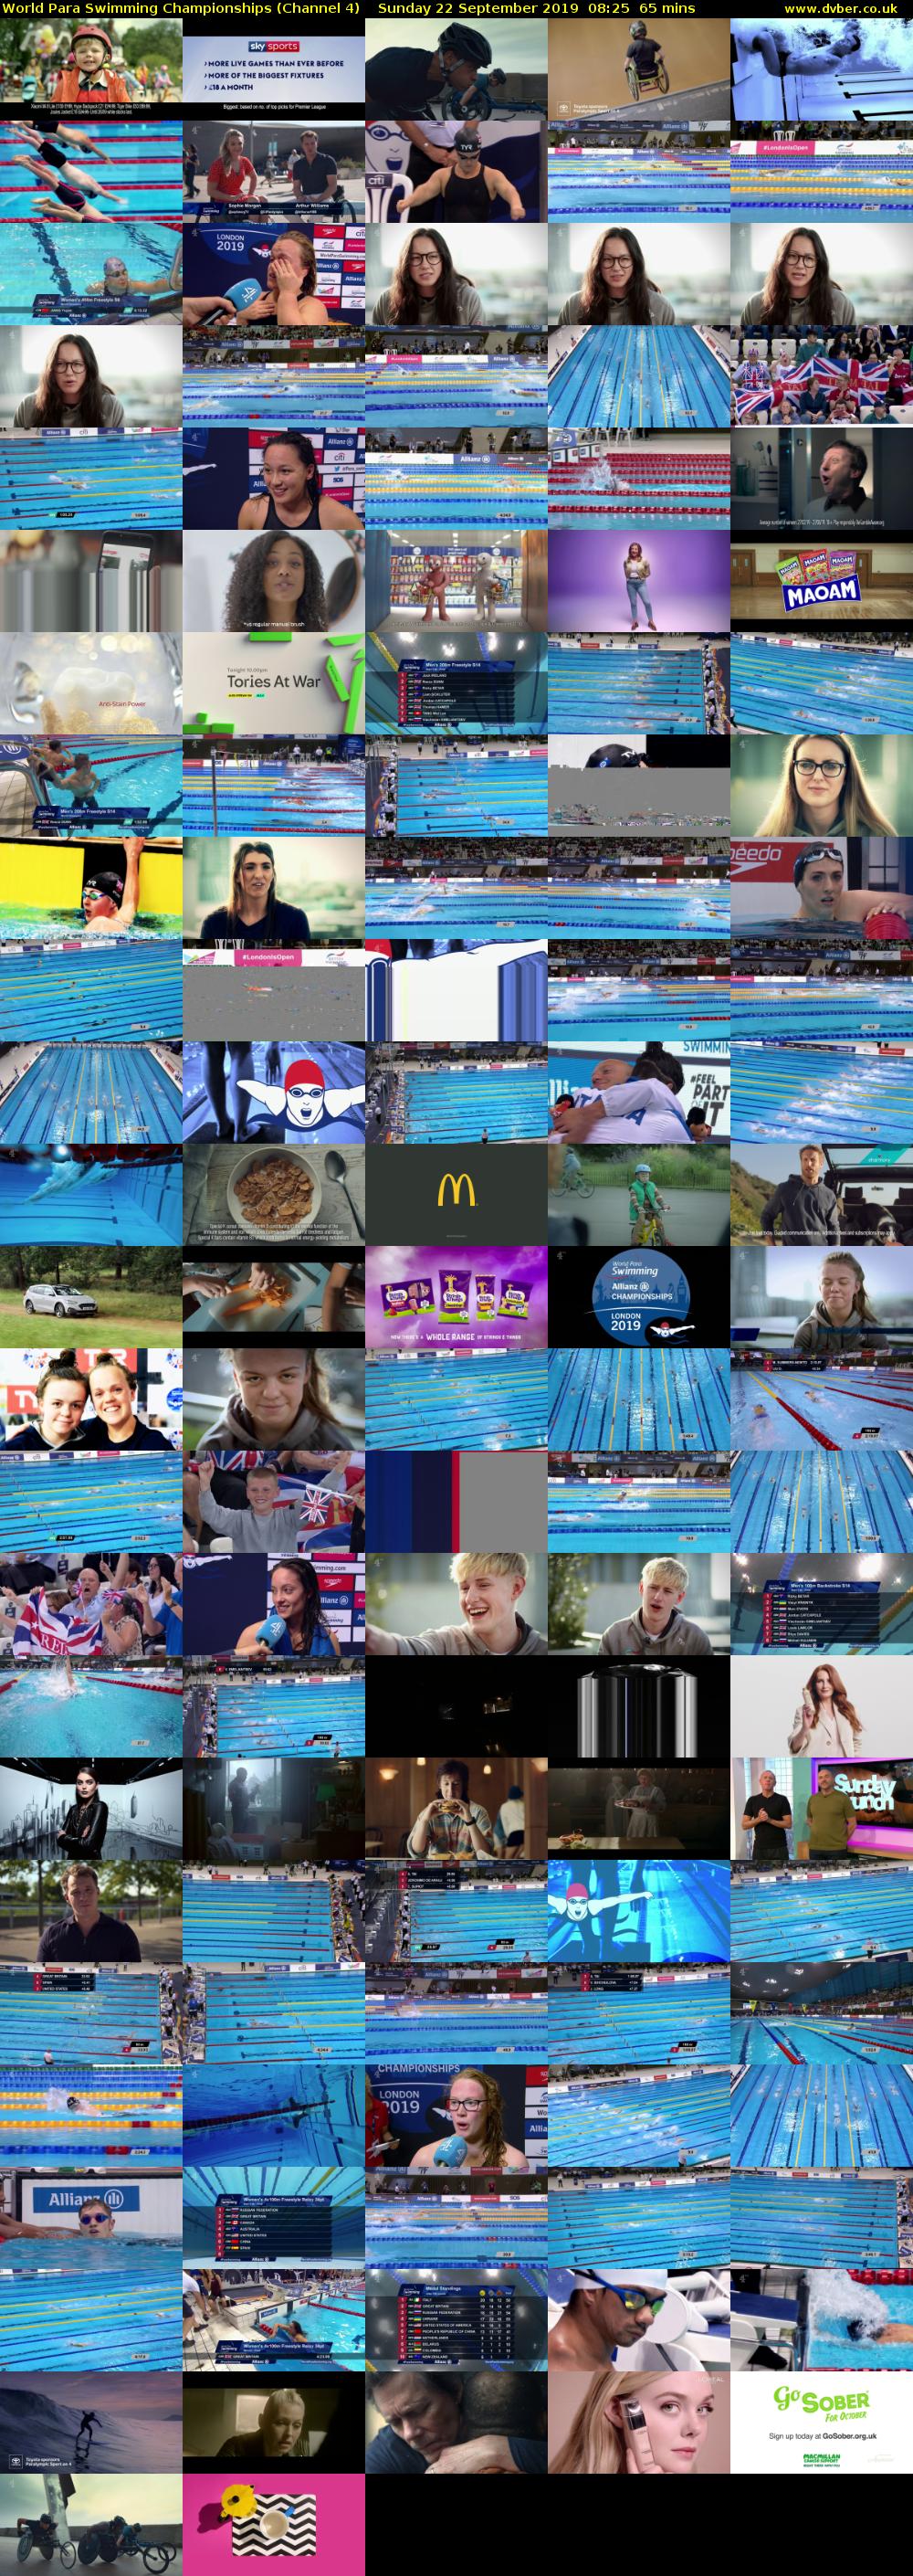 World Para Swimming Championships (Channel 4) Sunday 22 September 2019 08:25 - 09:30